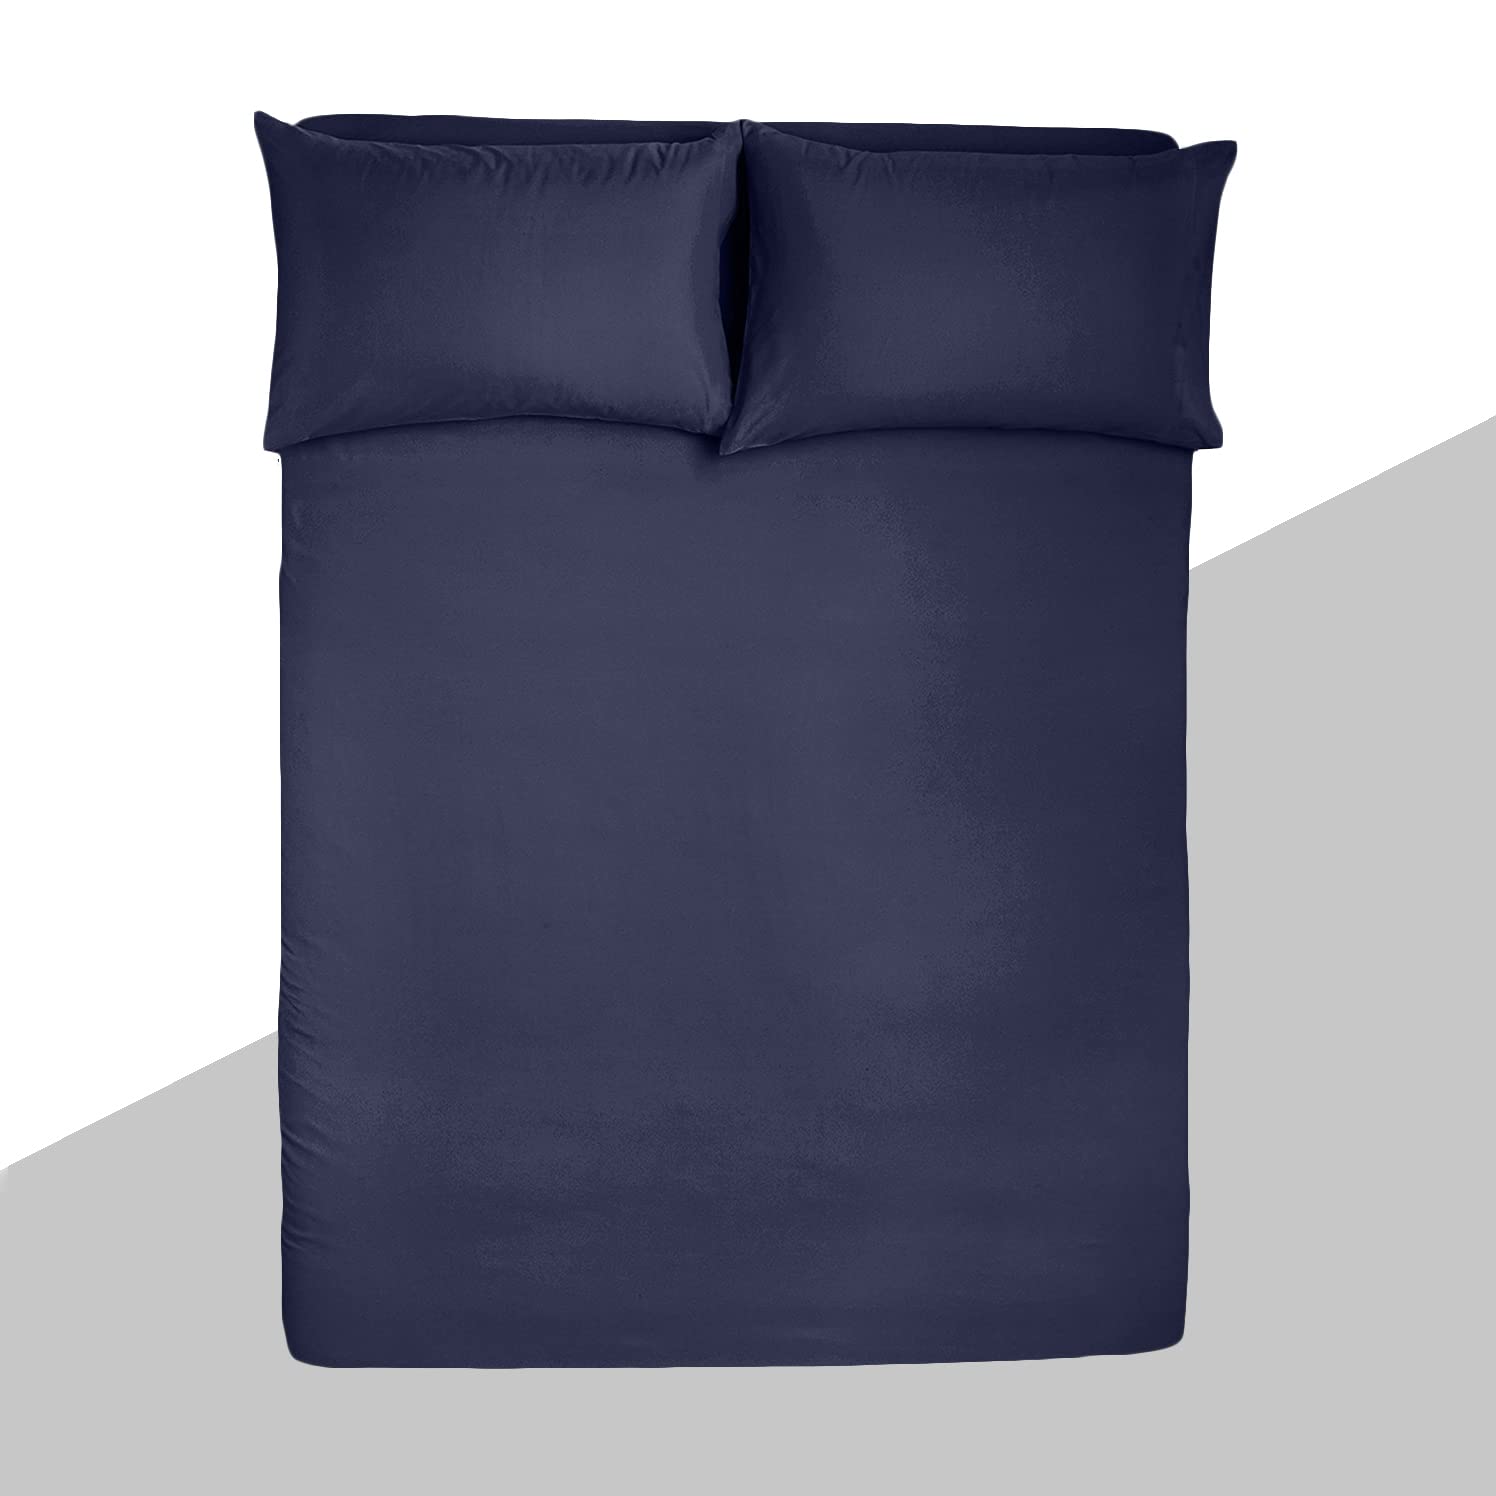 Bedsheet Single / Double Bed, Dark Blue